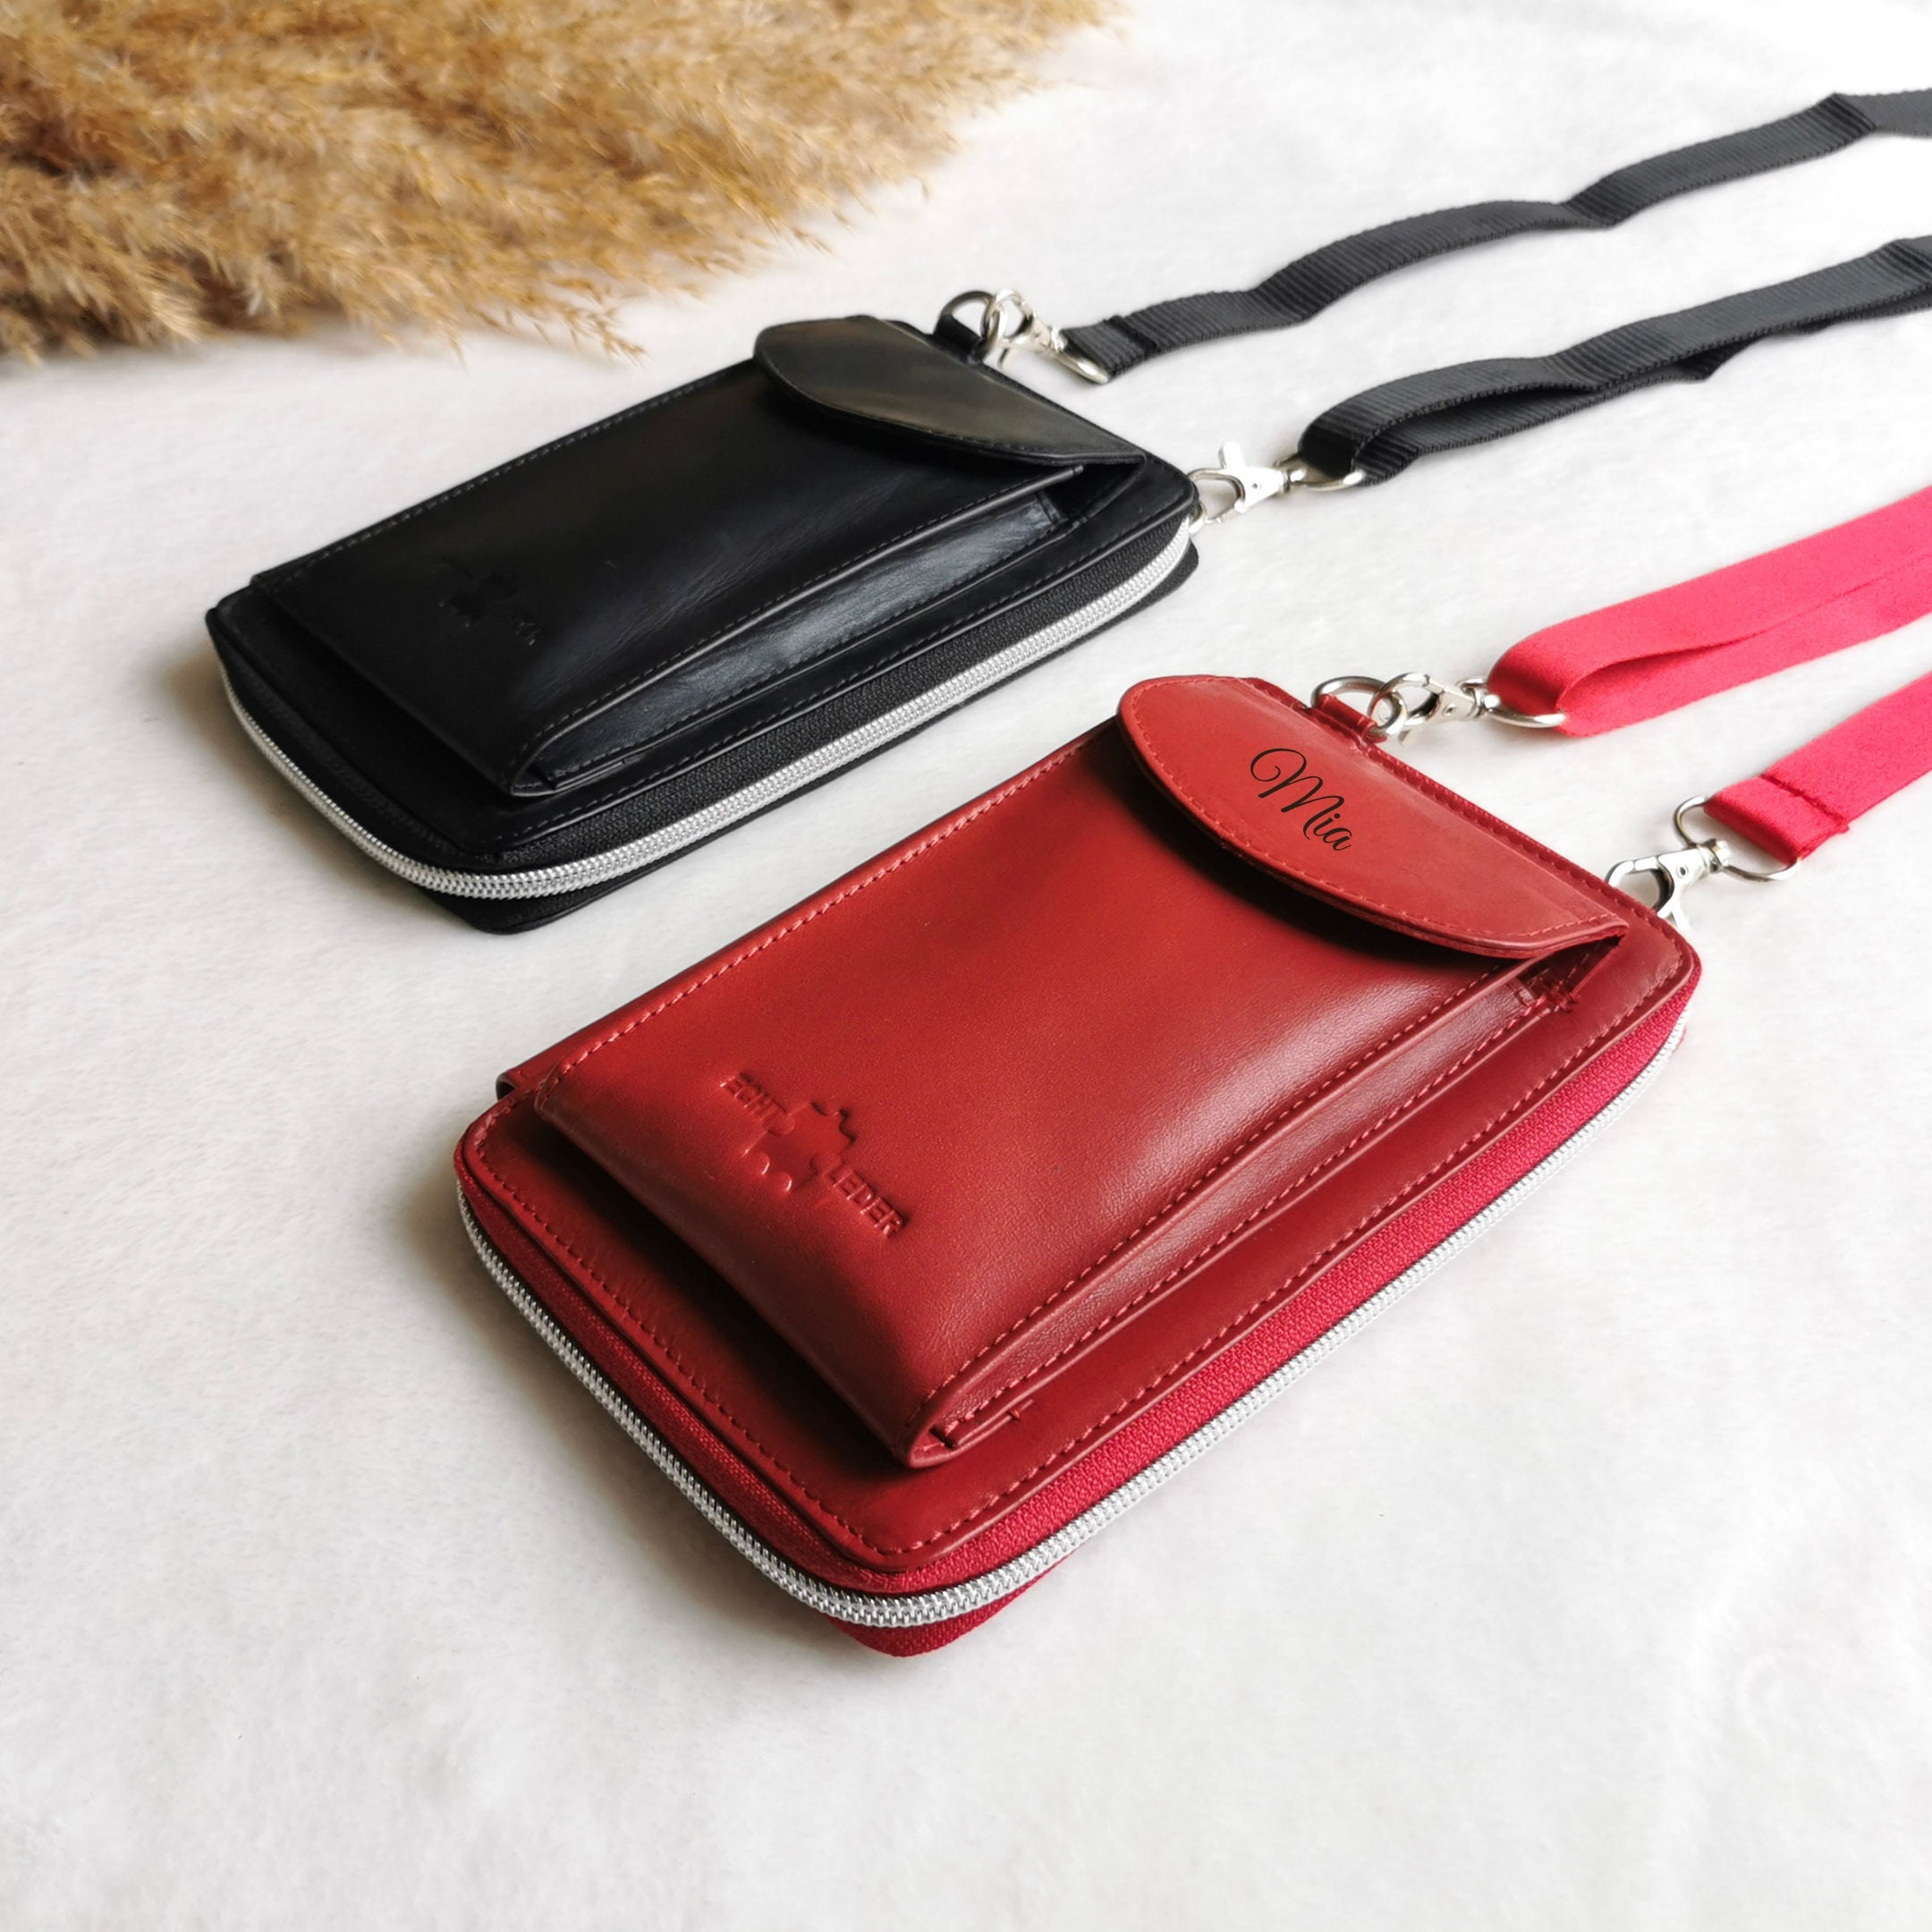 Men Practical Phone Wallet Case Belt Leather Pouch Phone Waist Bag Mobile